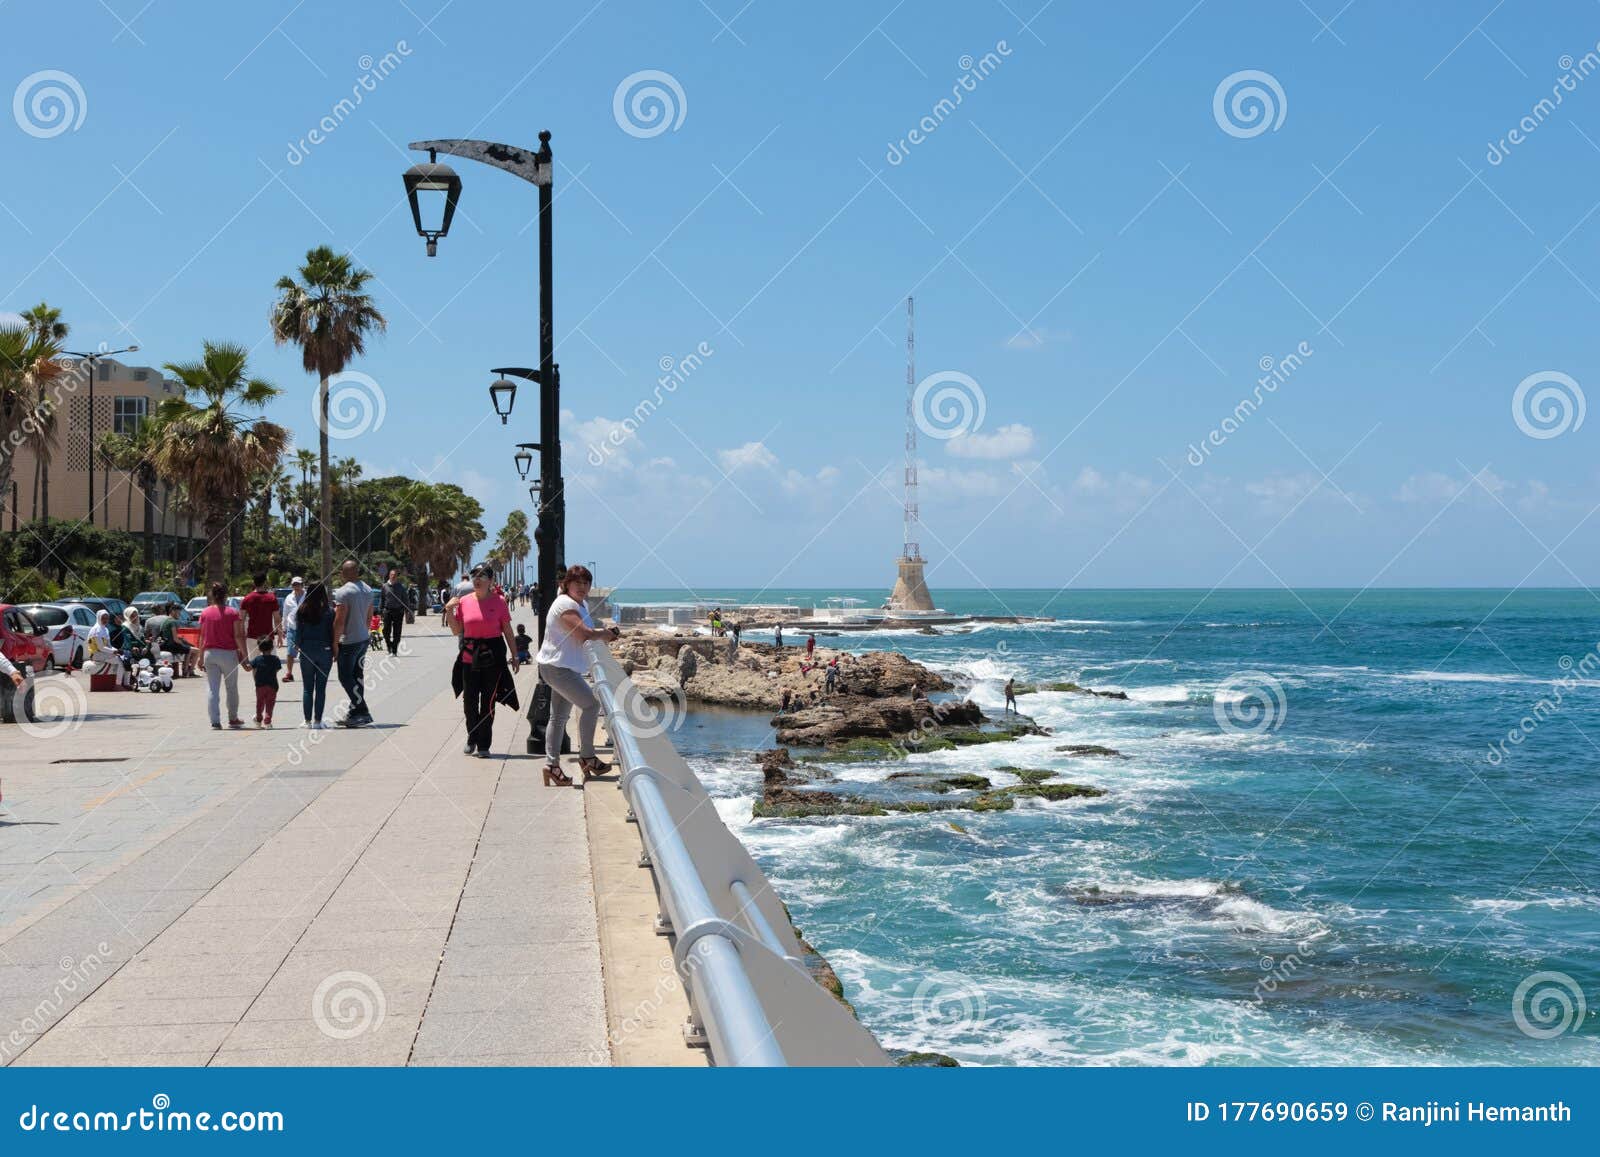 People Walking in the Corniche Editorial Stock Image - Image of modern,  lebanon: 177690659